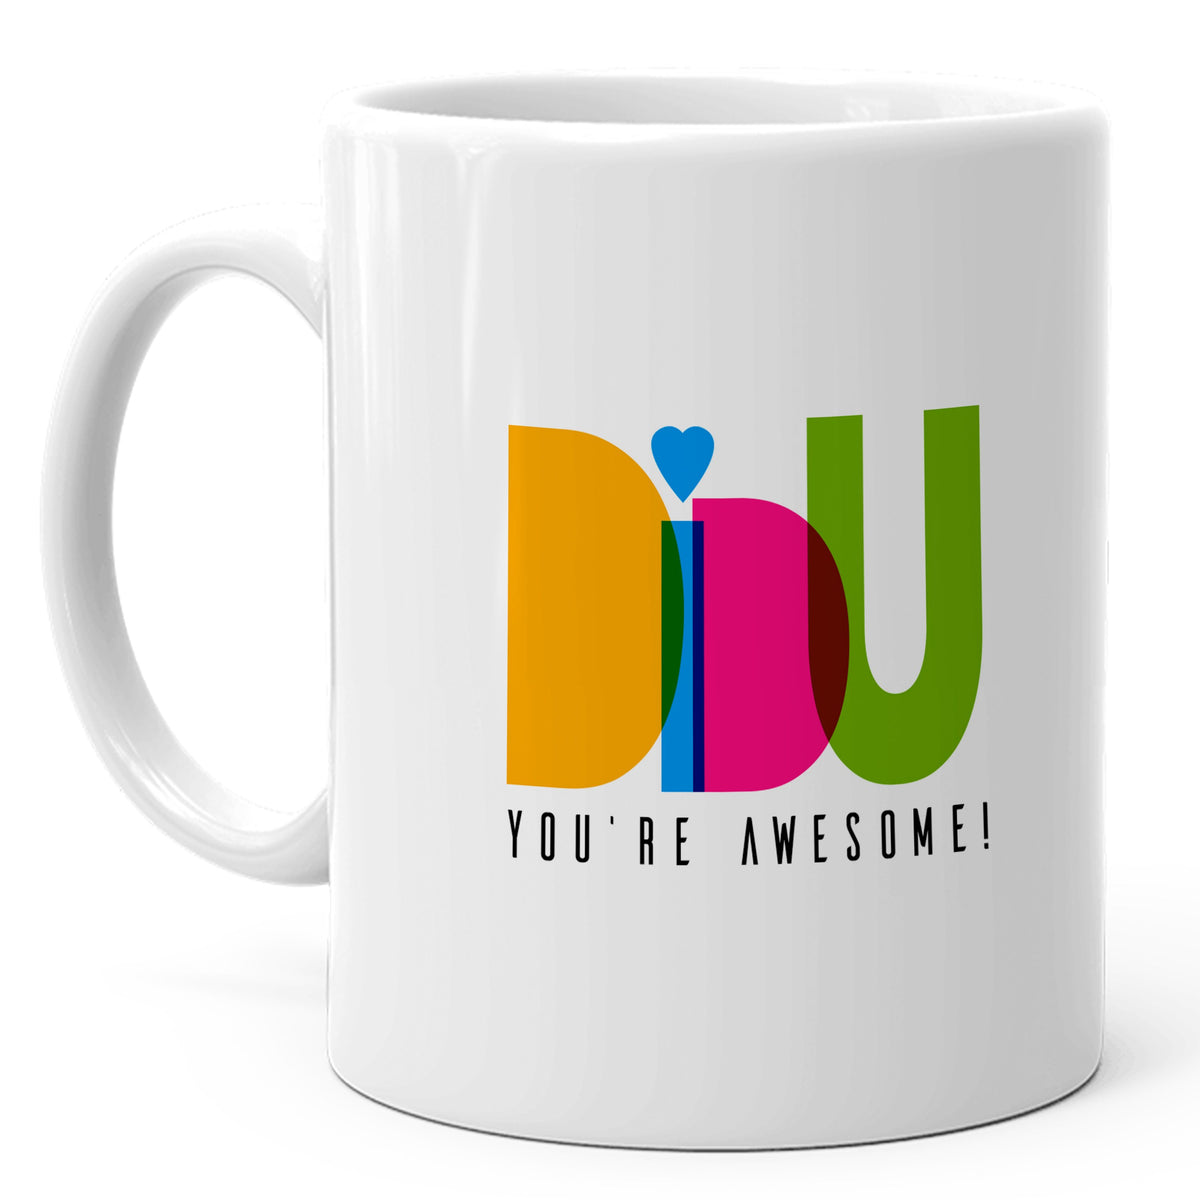 didu-youre-awesome-mug